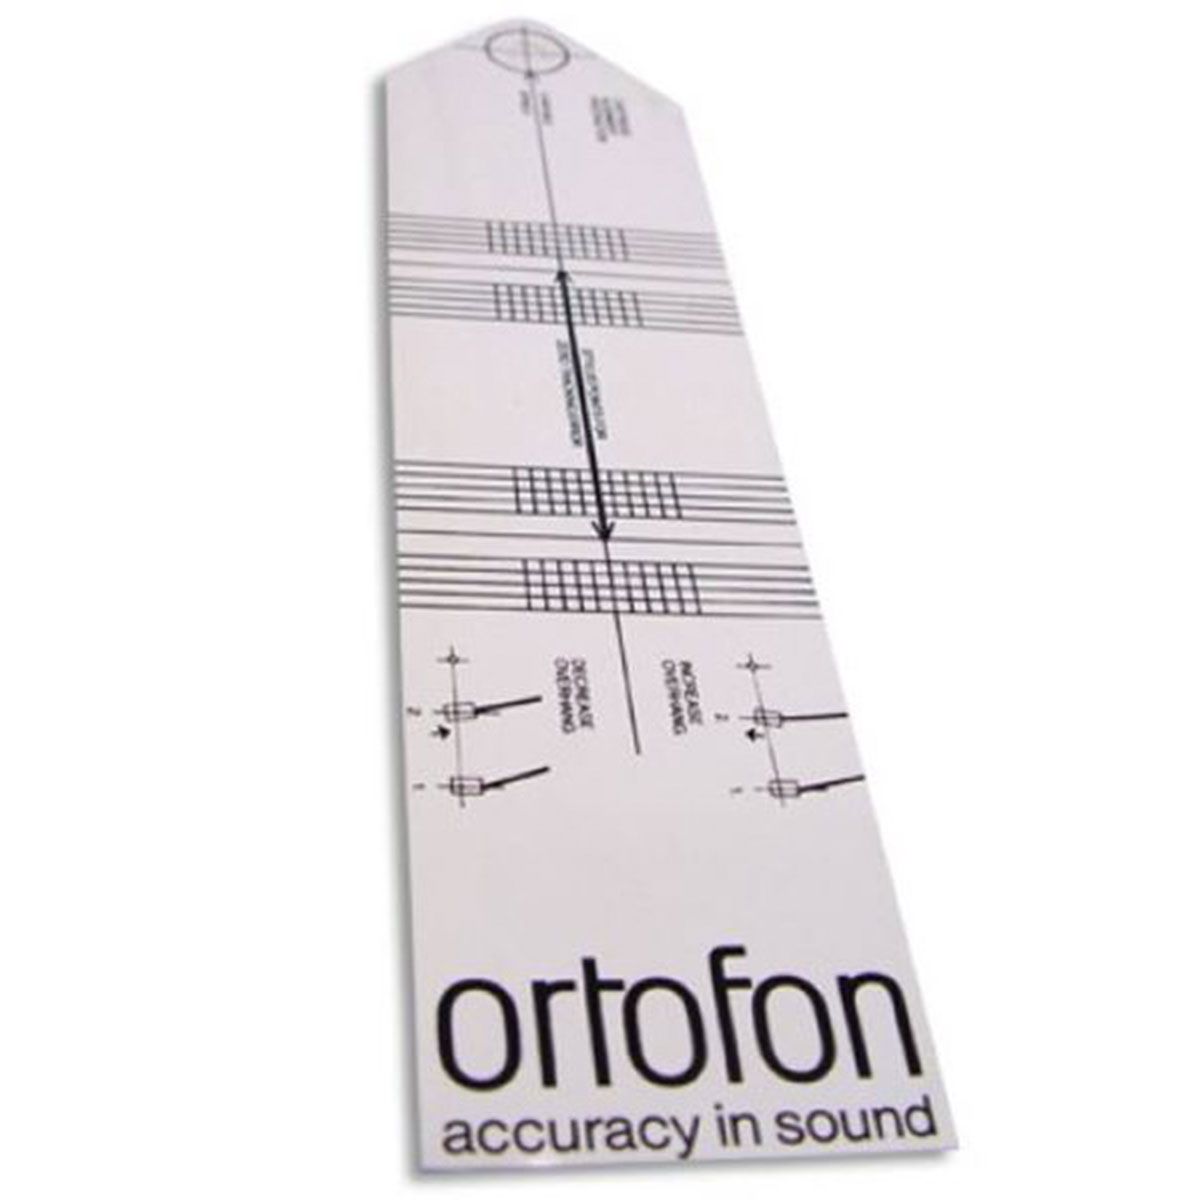 Ortofon Cartridge Alignment Protractor